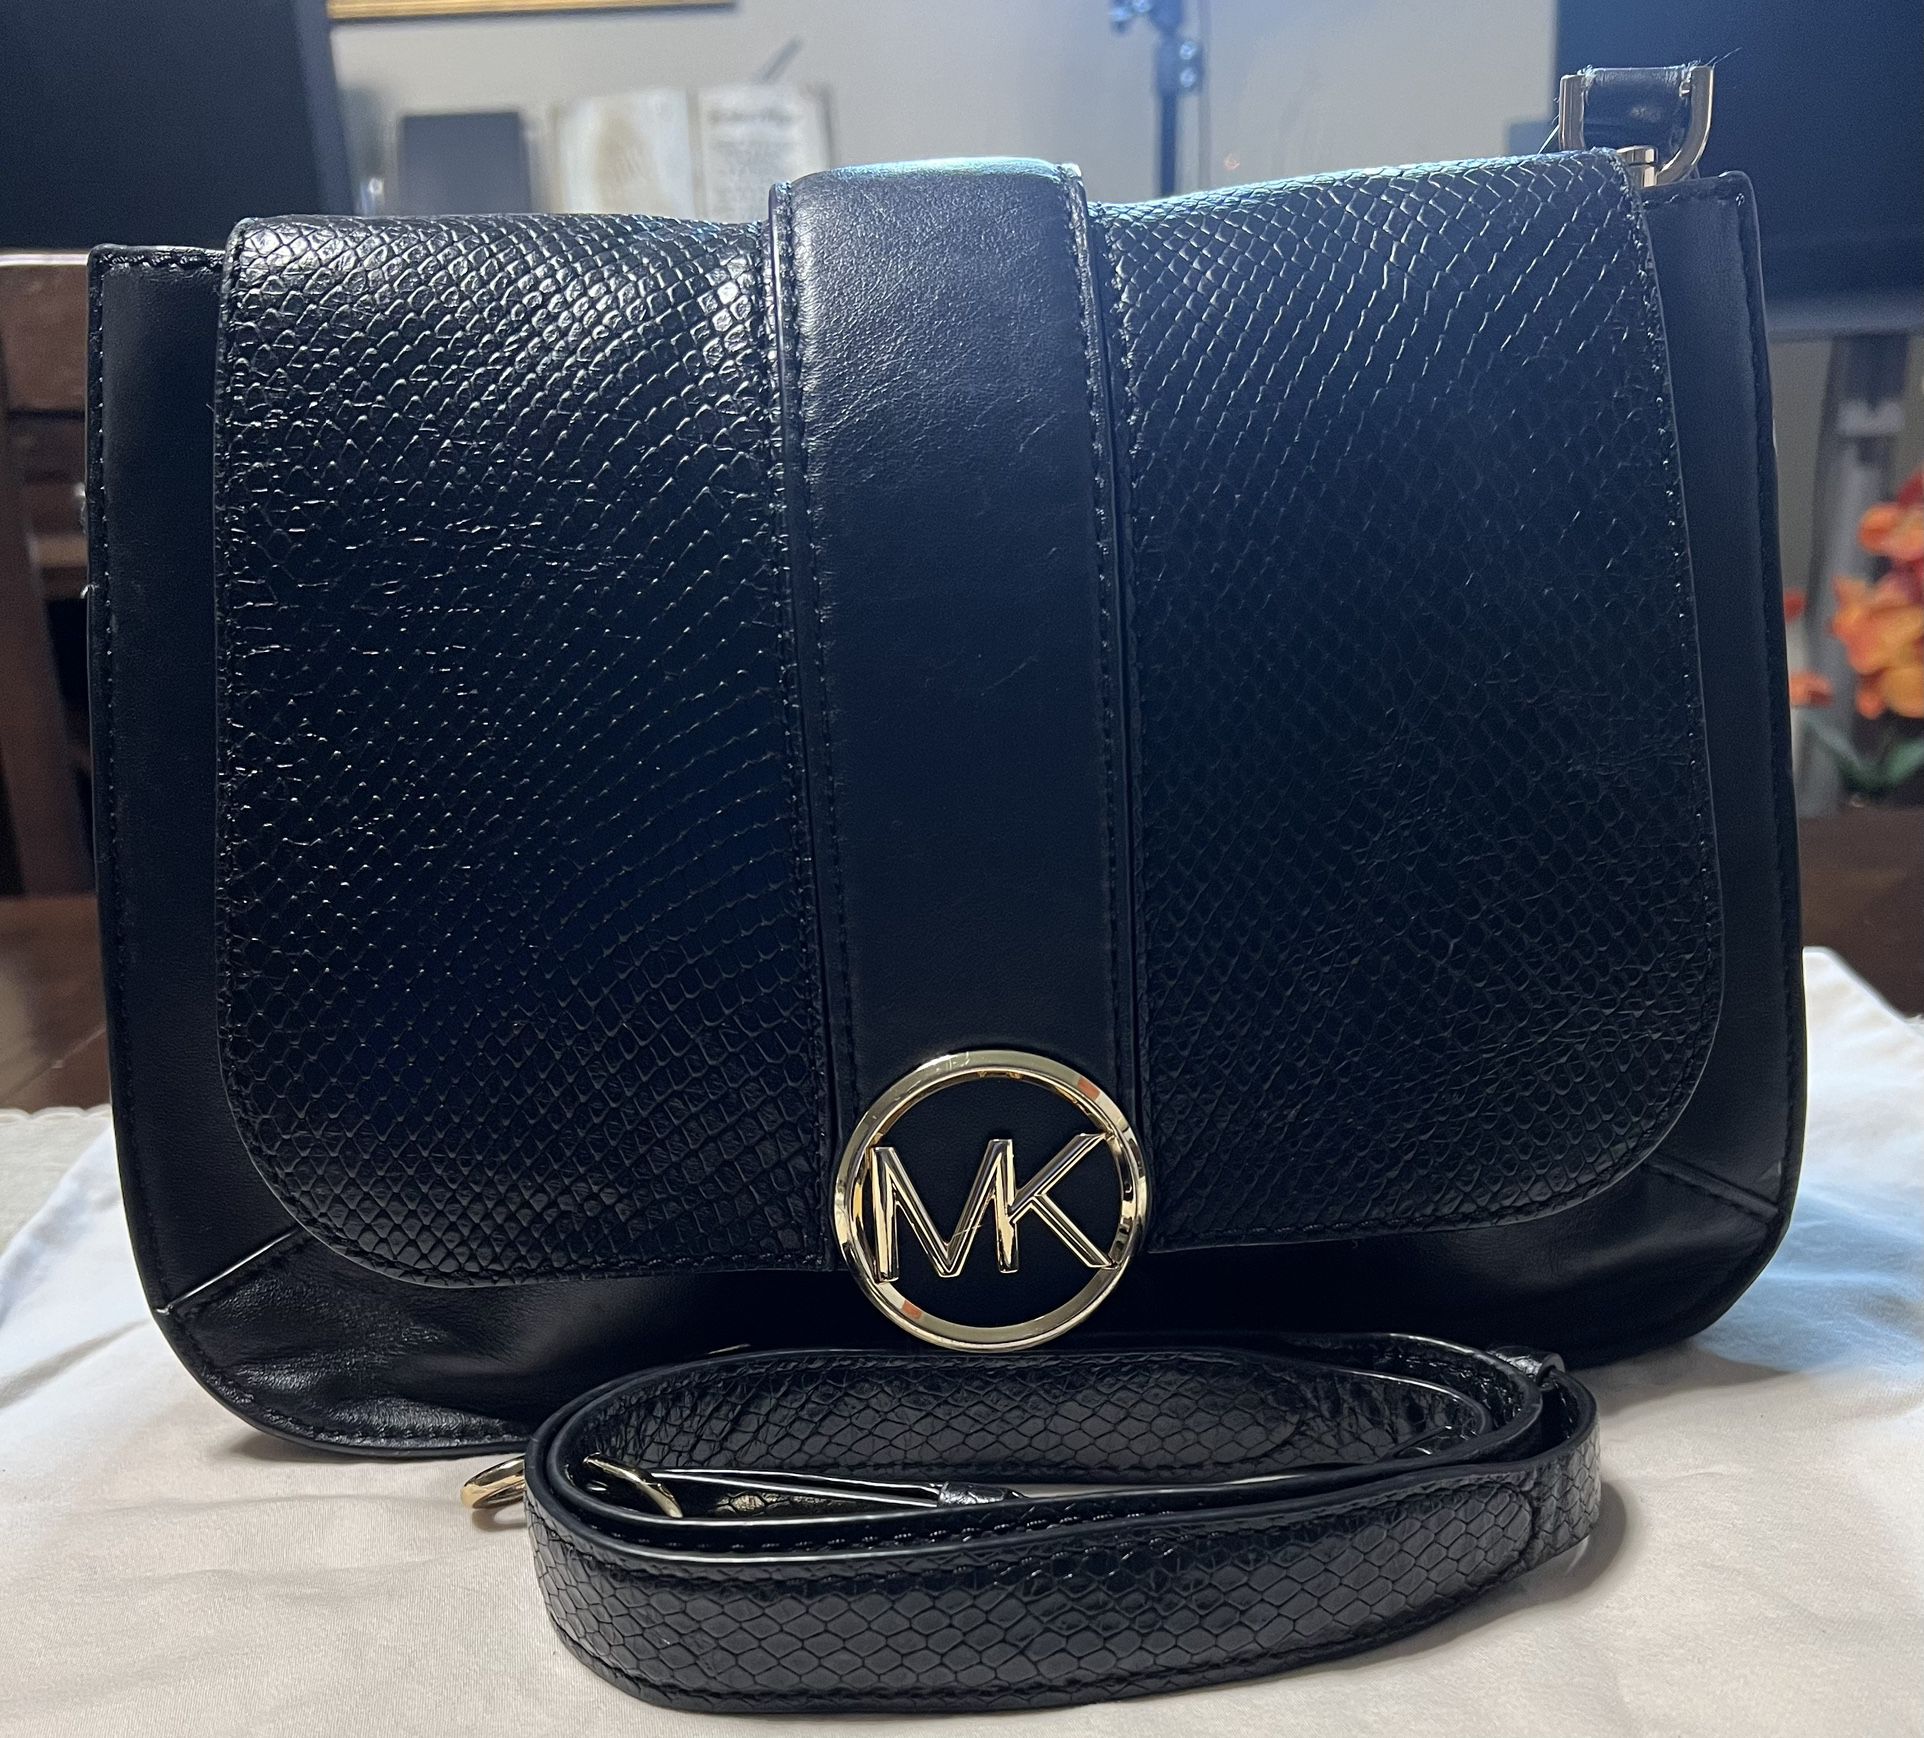 Michael Kors Black Handbag 